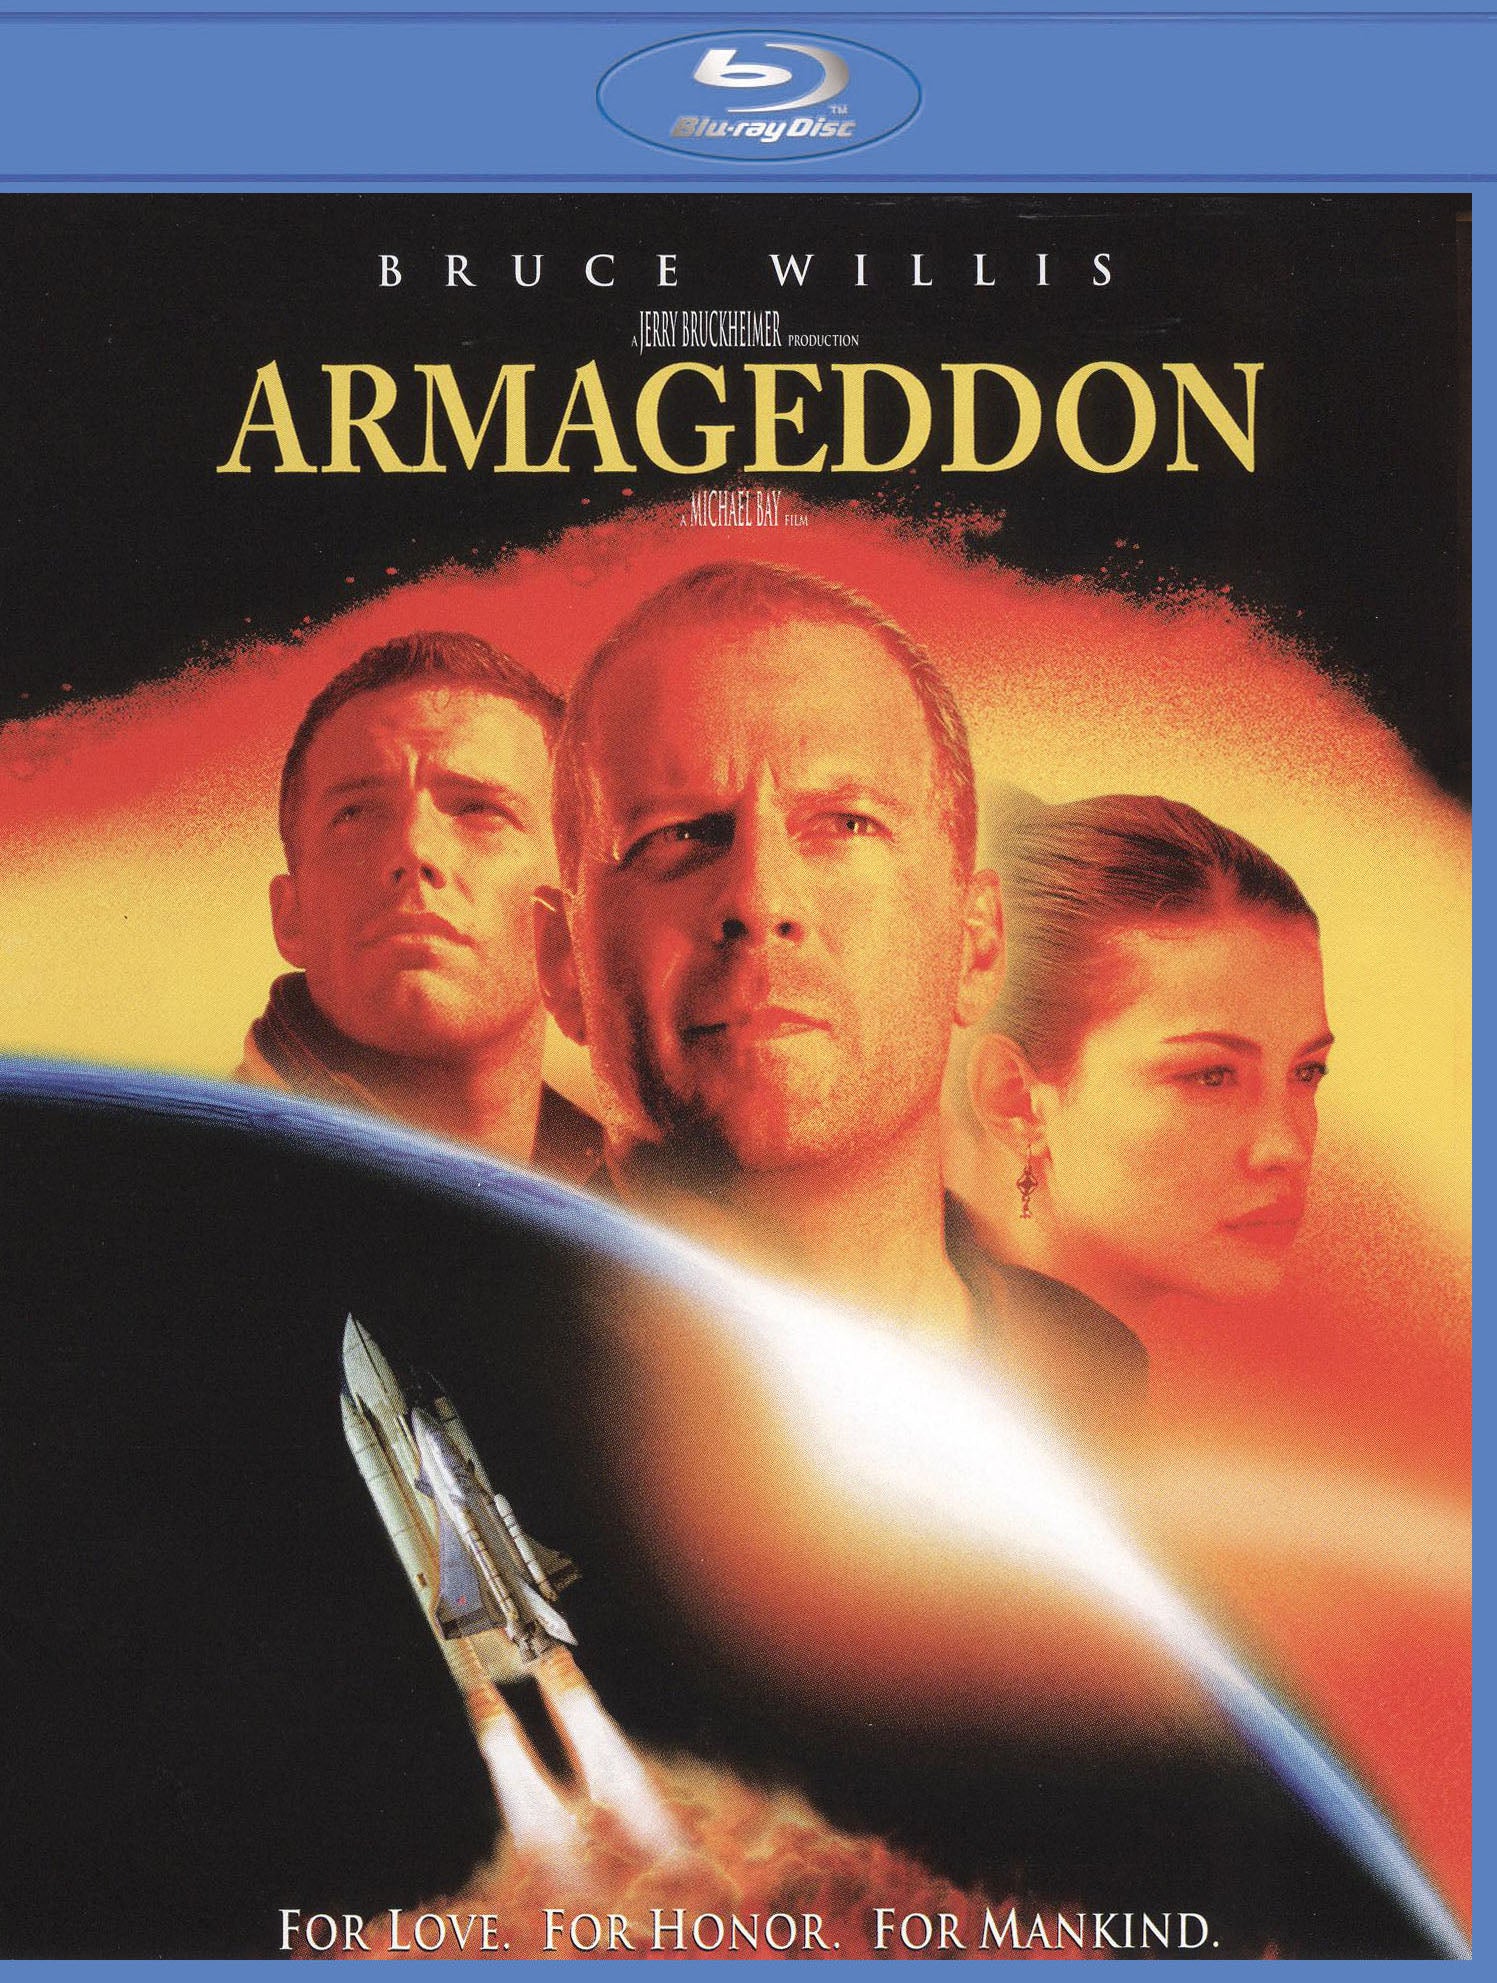 Armageddon [Blu-ray] cover art